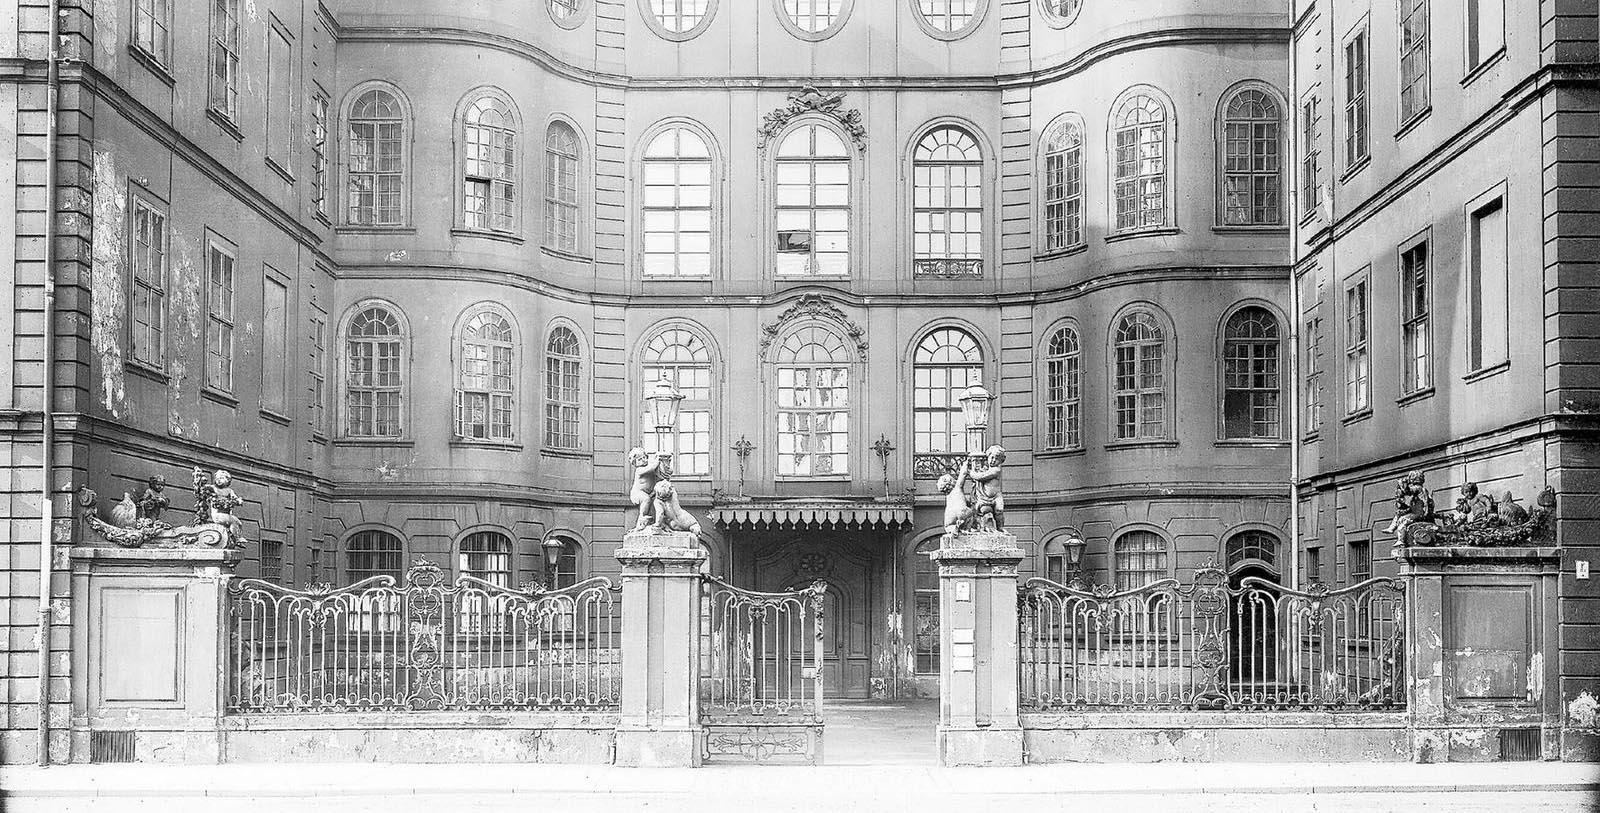 Historic Image of Palace Entrance, Hotel Taschenbergpalais Kempinski Dresden, 1713, Member of Historic Hotels Worldwide, Dresden, Germany, History